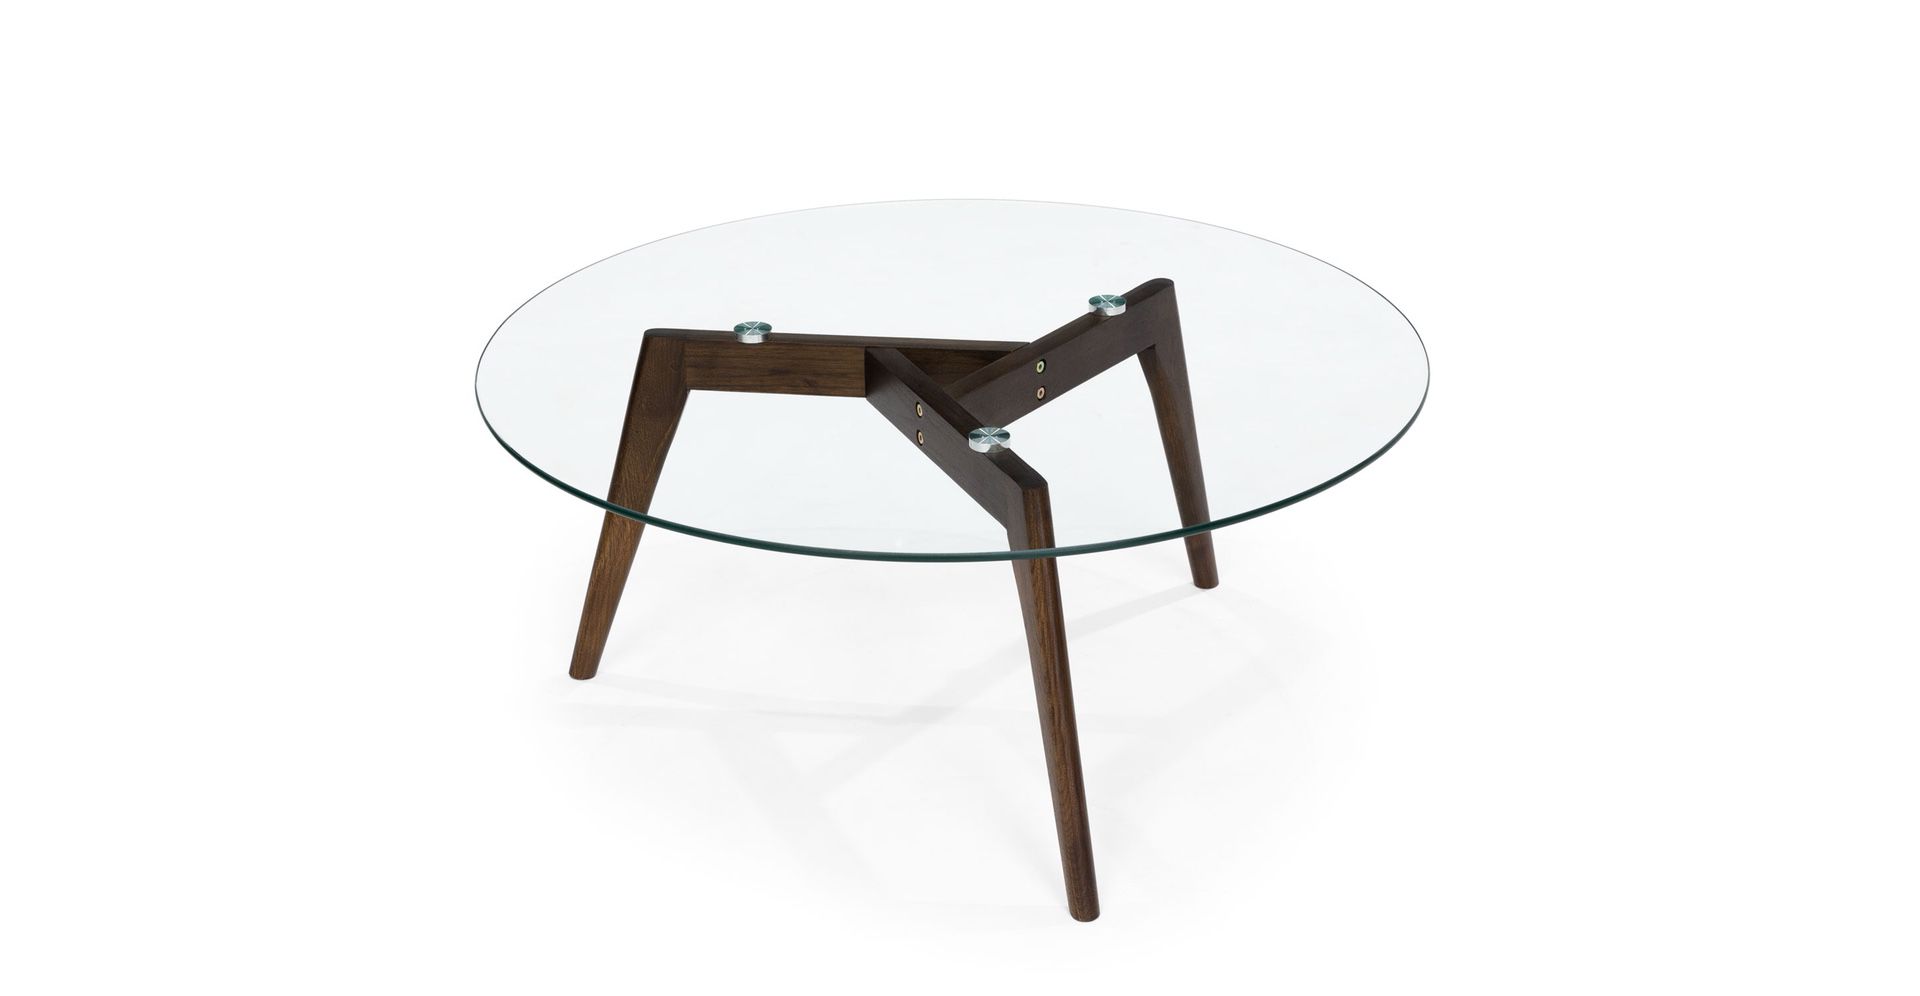 Designer furniture! Clarus Walnut Coffee Table 14"H x 31.5" Diameter